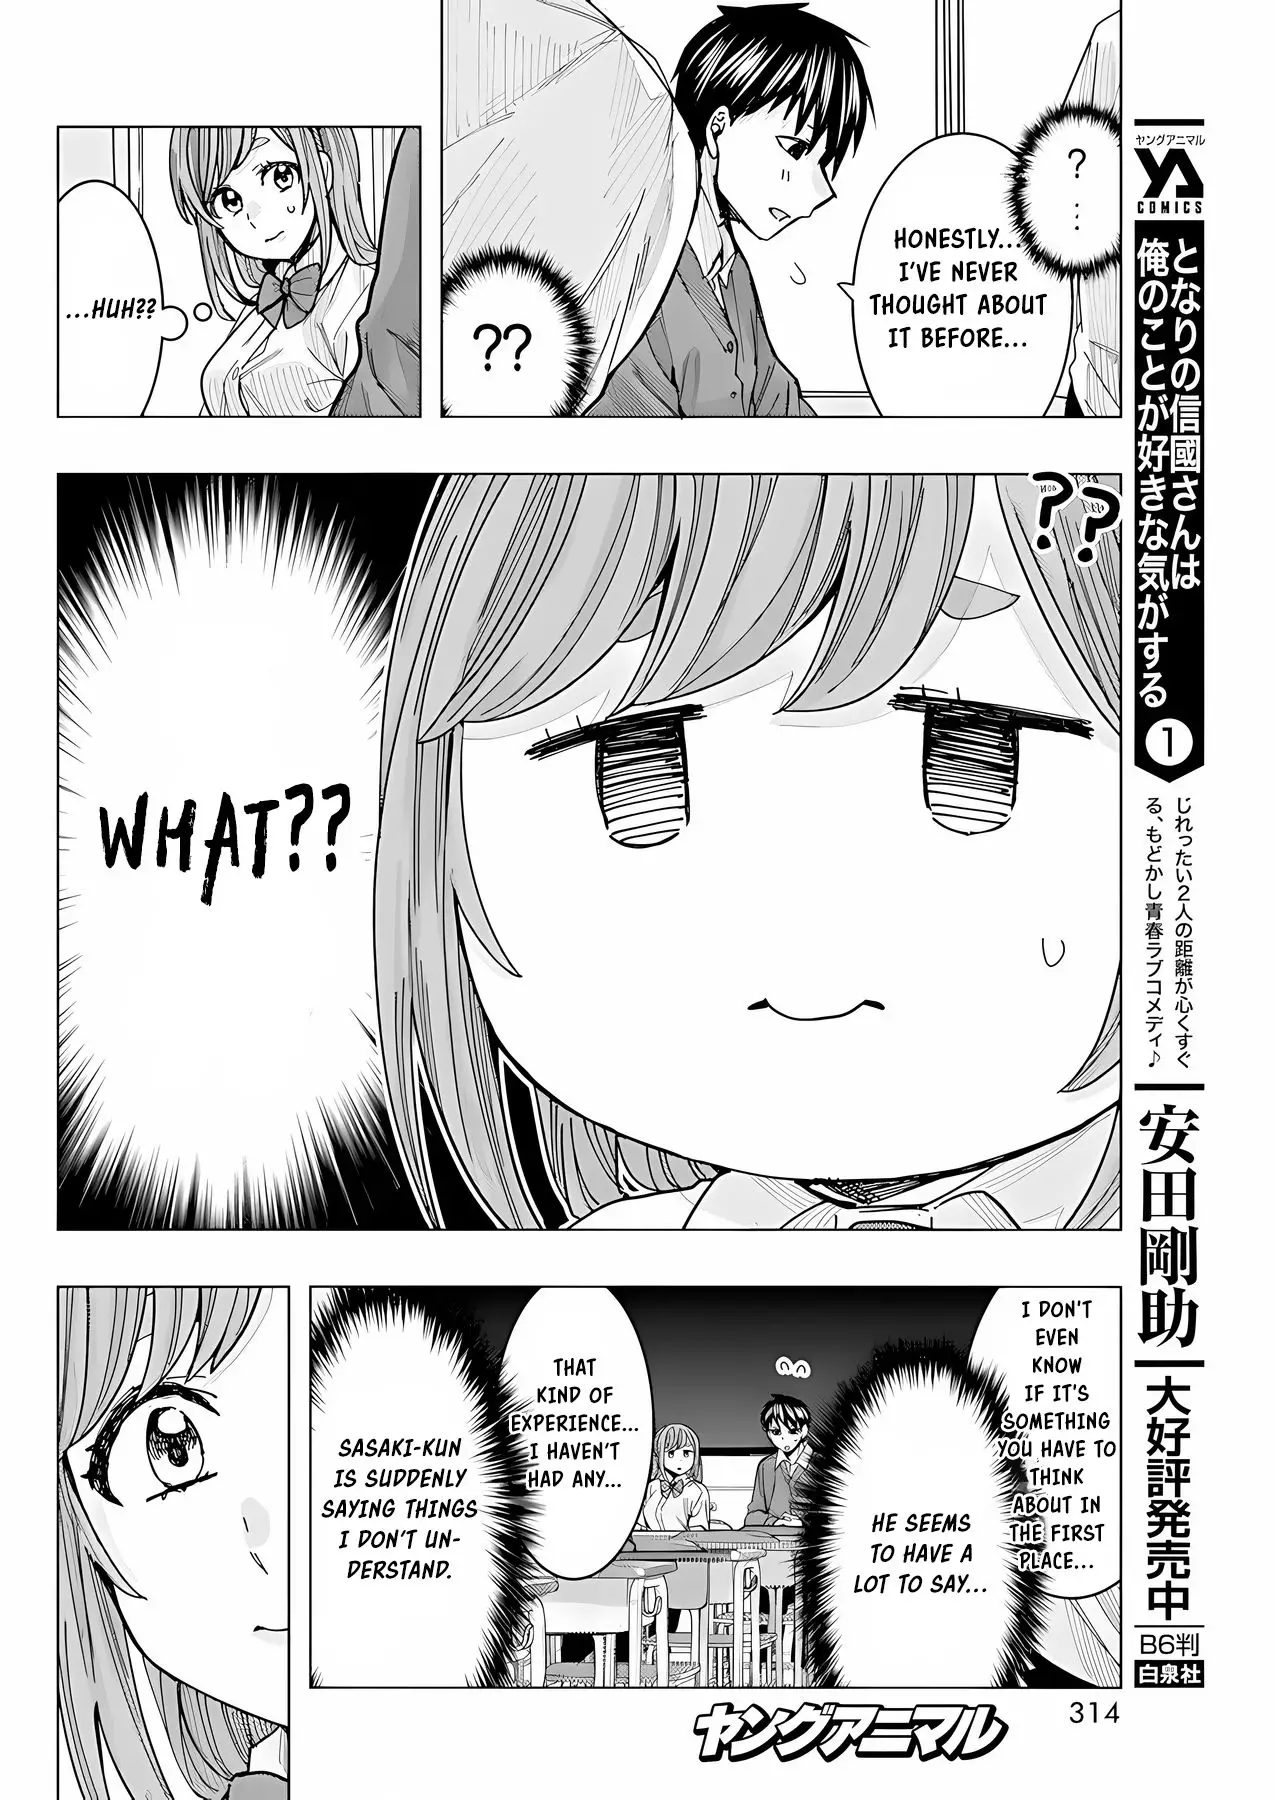 "nobukuni-San" Does She Like Me? - 21 page 7-c23768b6